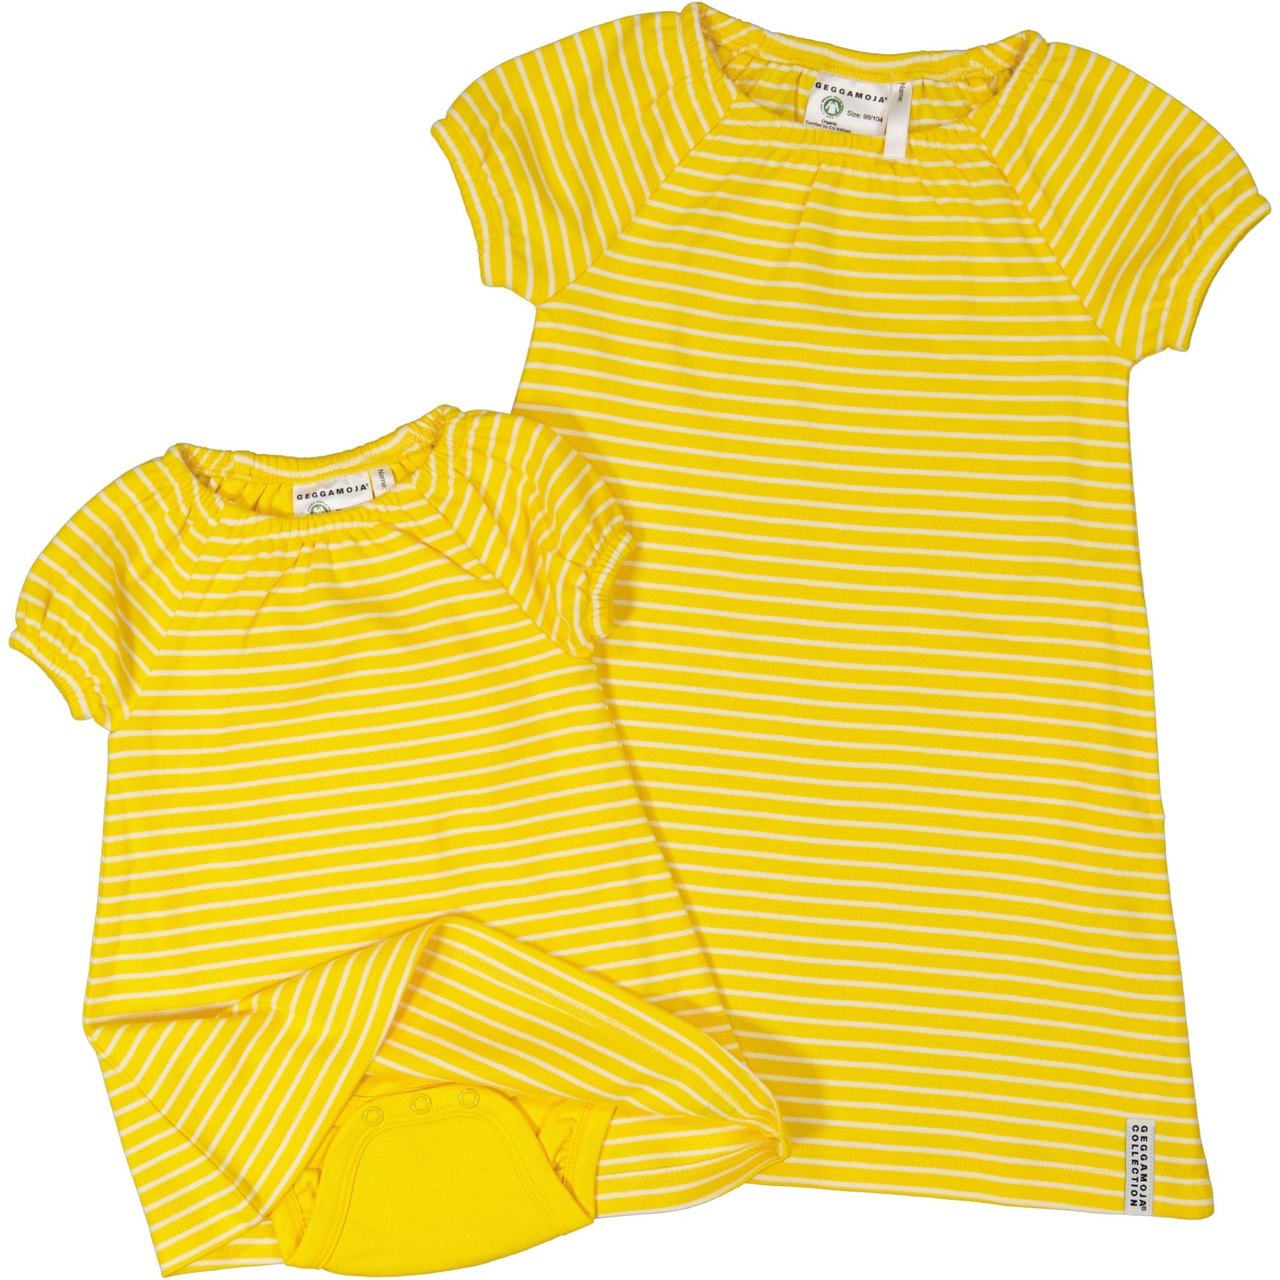 Singoalla dress Yellow/white  74/80